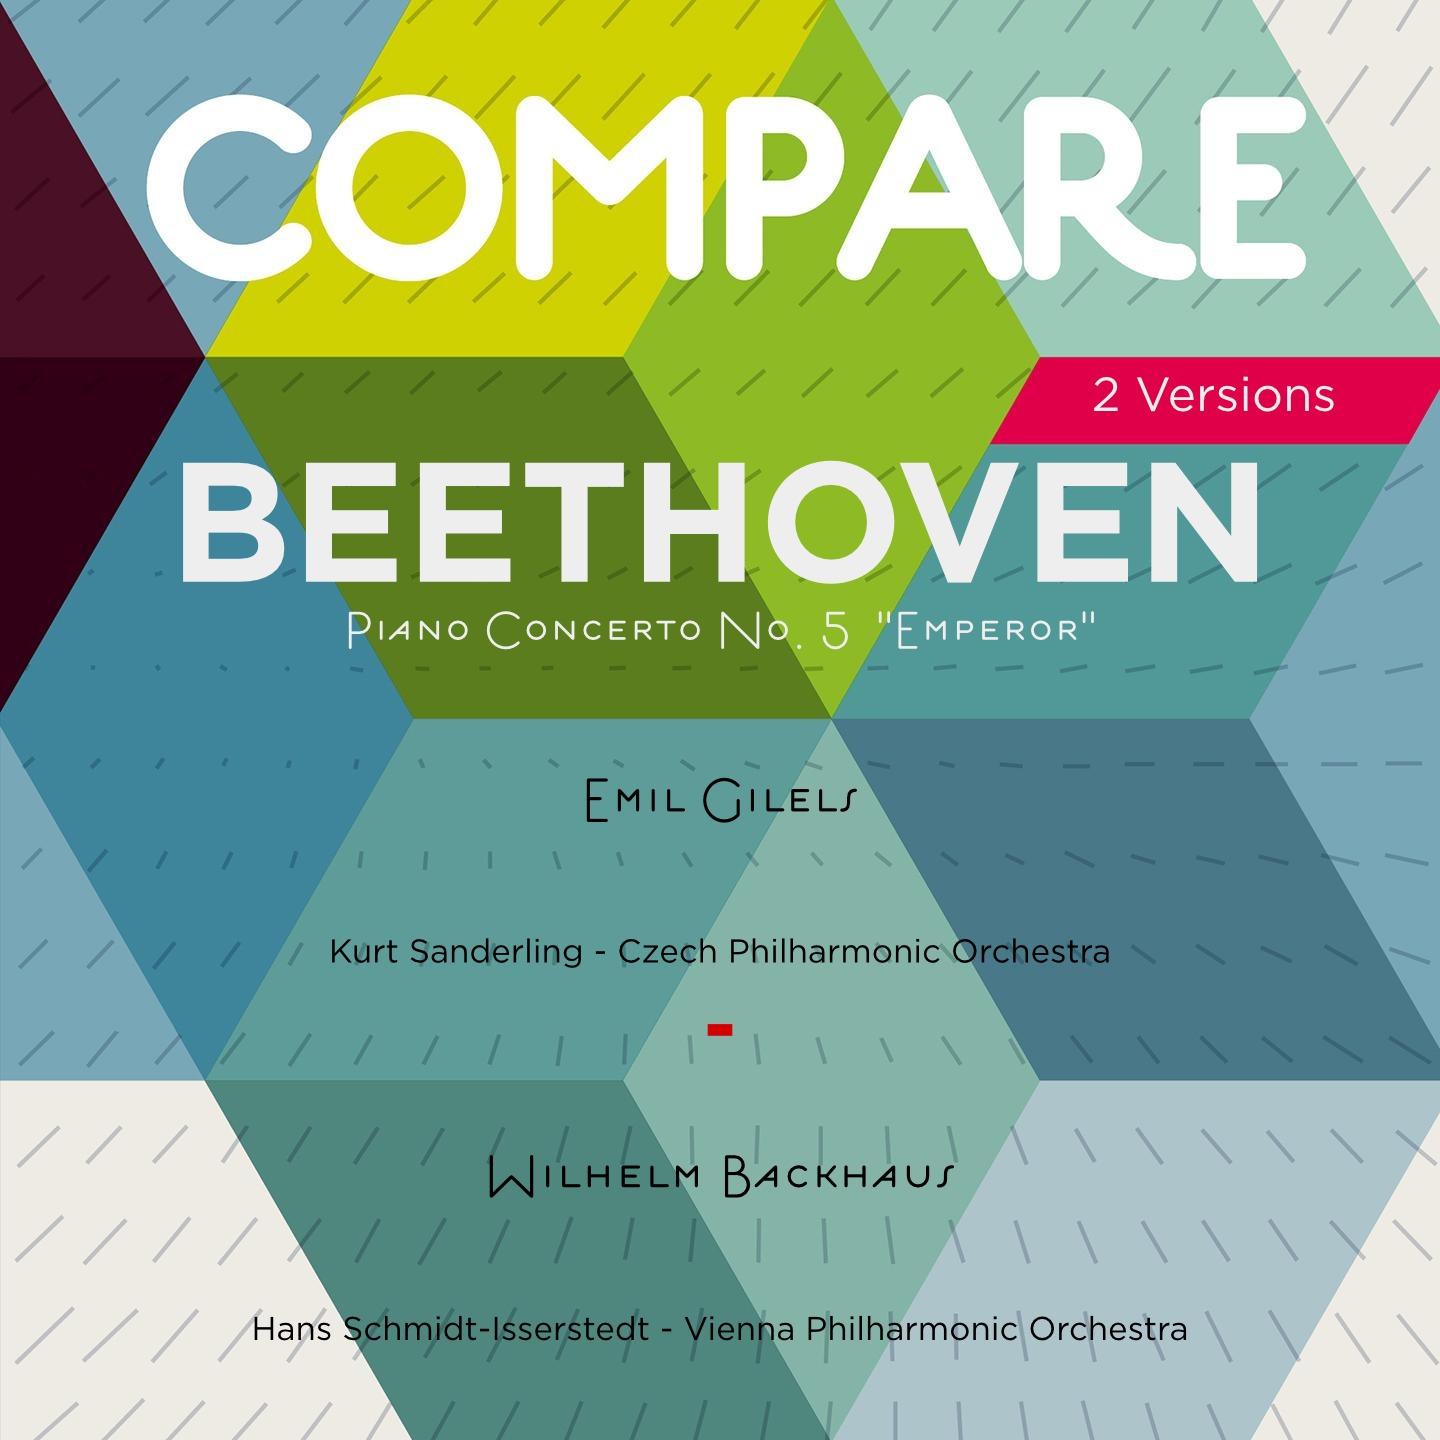 Beethoven: Piano Concerto No. 5, Emil Gilels vs. Wilhelm Backhaus专辑